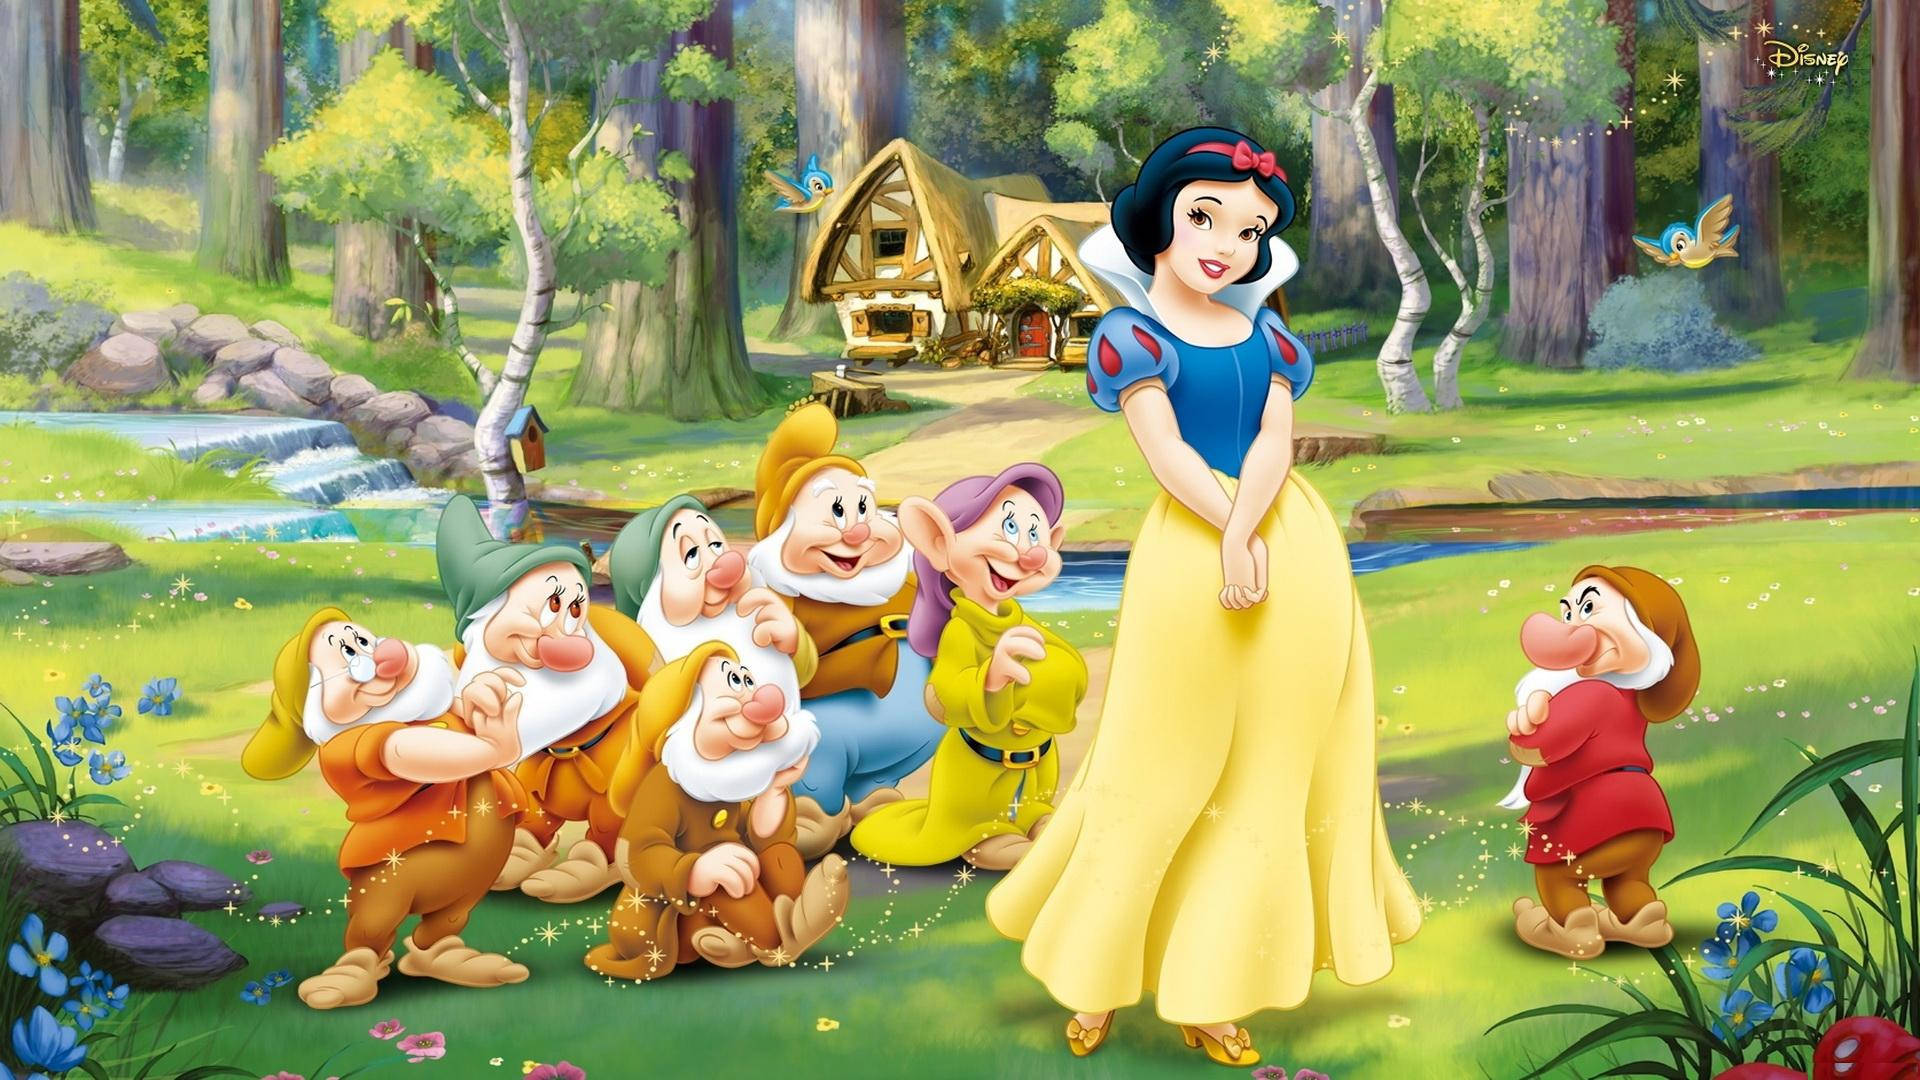 Cute Cartoon Princess Snow White Picture